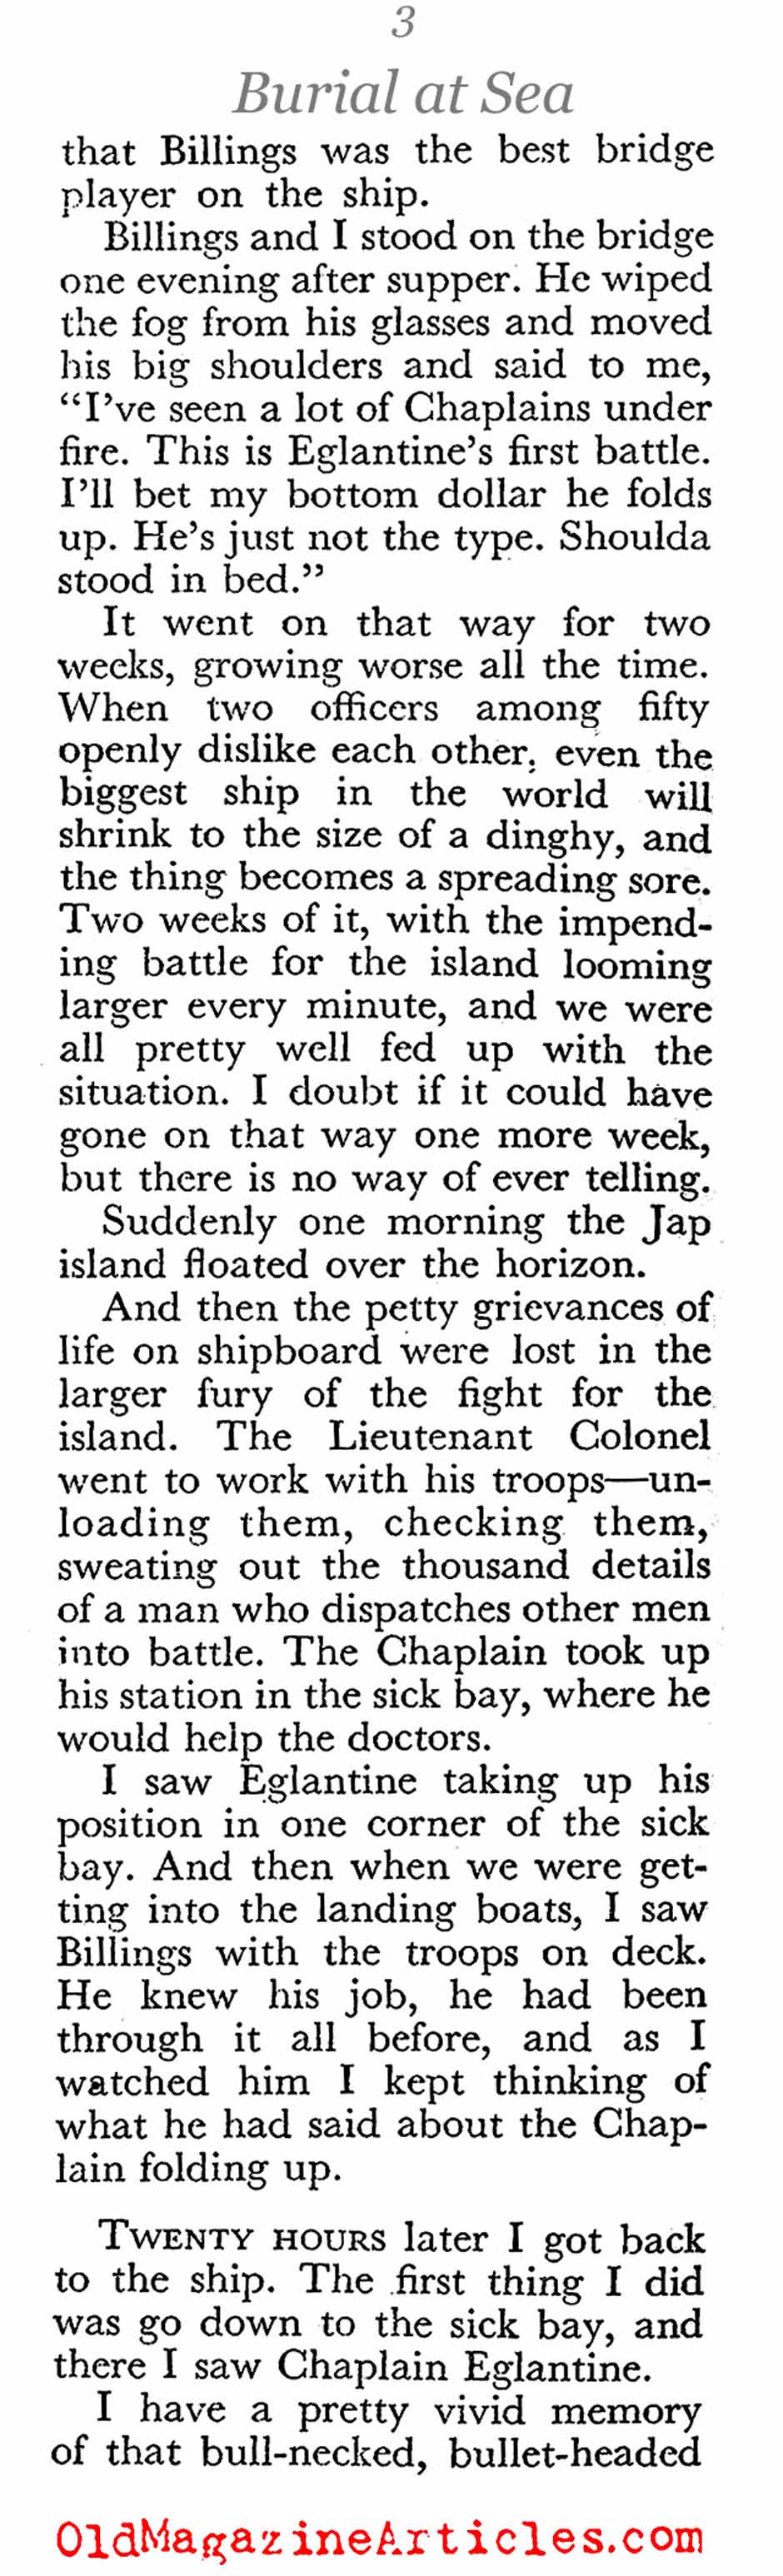 ''Burial at Sea'' (Coronet Magazine, 1945)